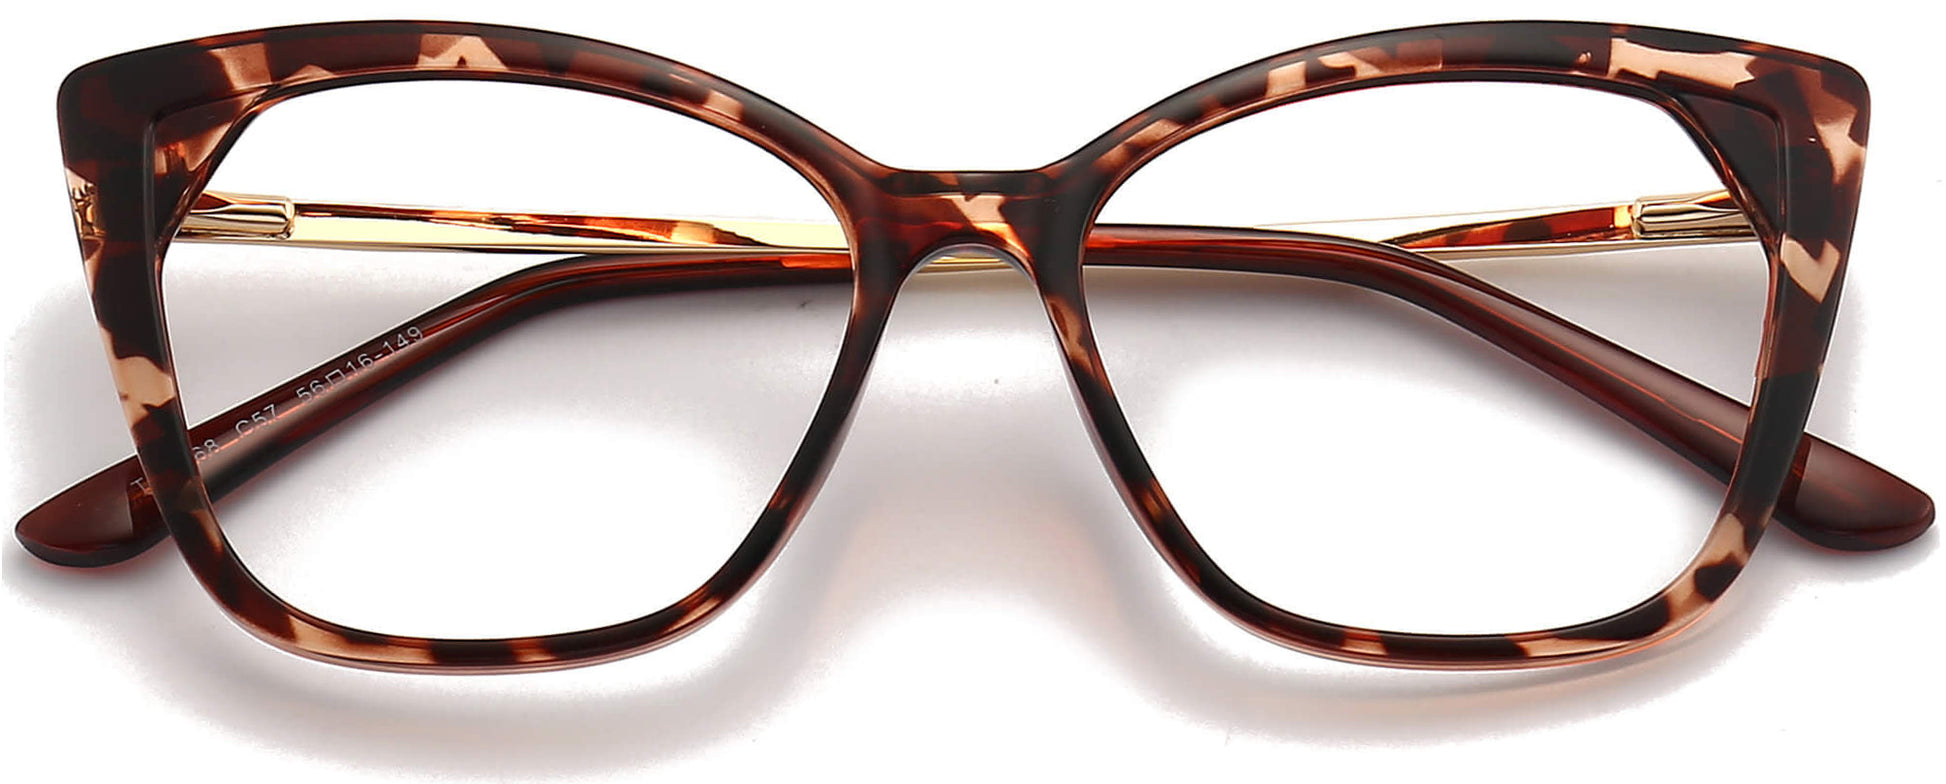 Alani Cateye Tortoise Eyeglasses from ANRRI, closed view